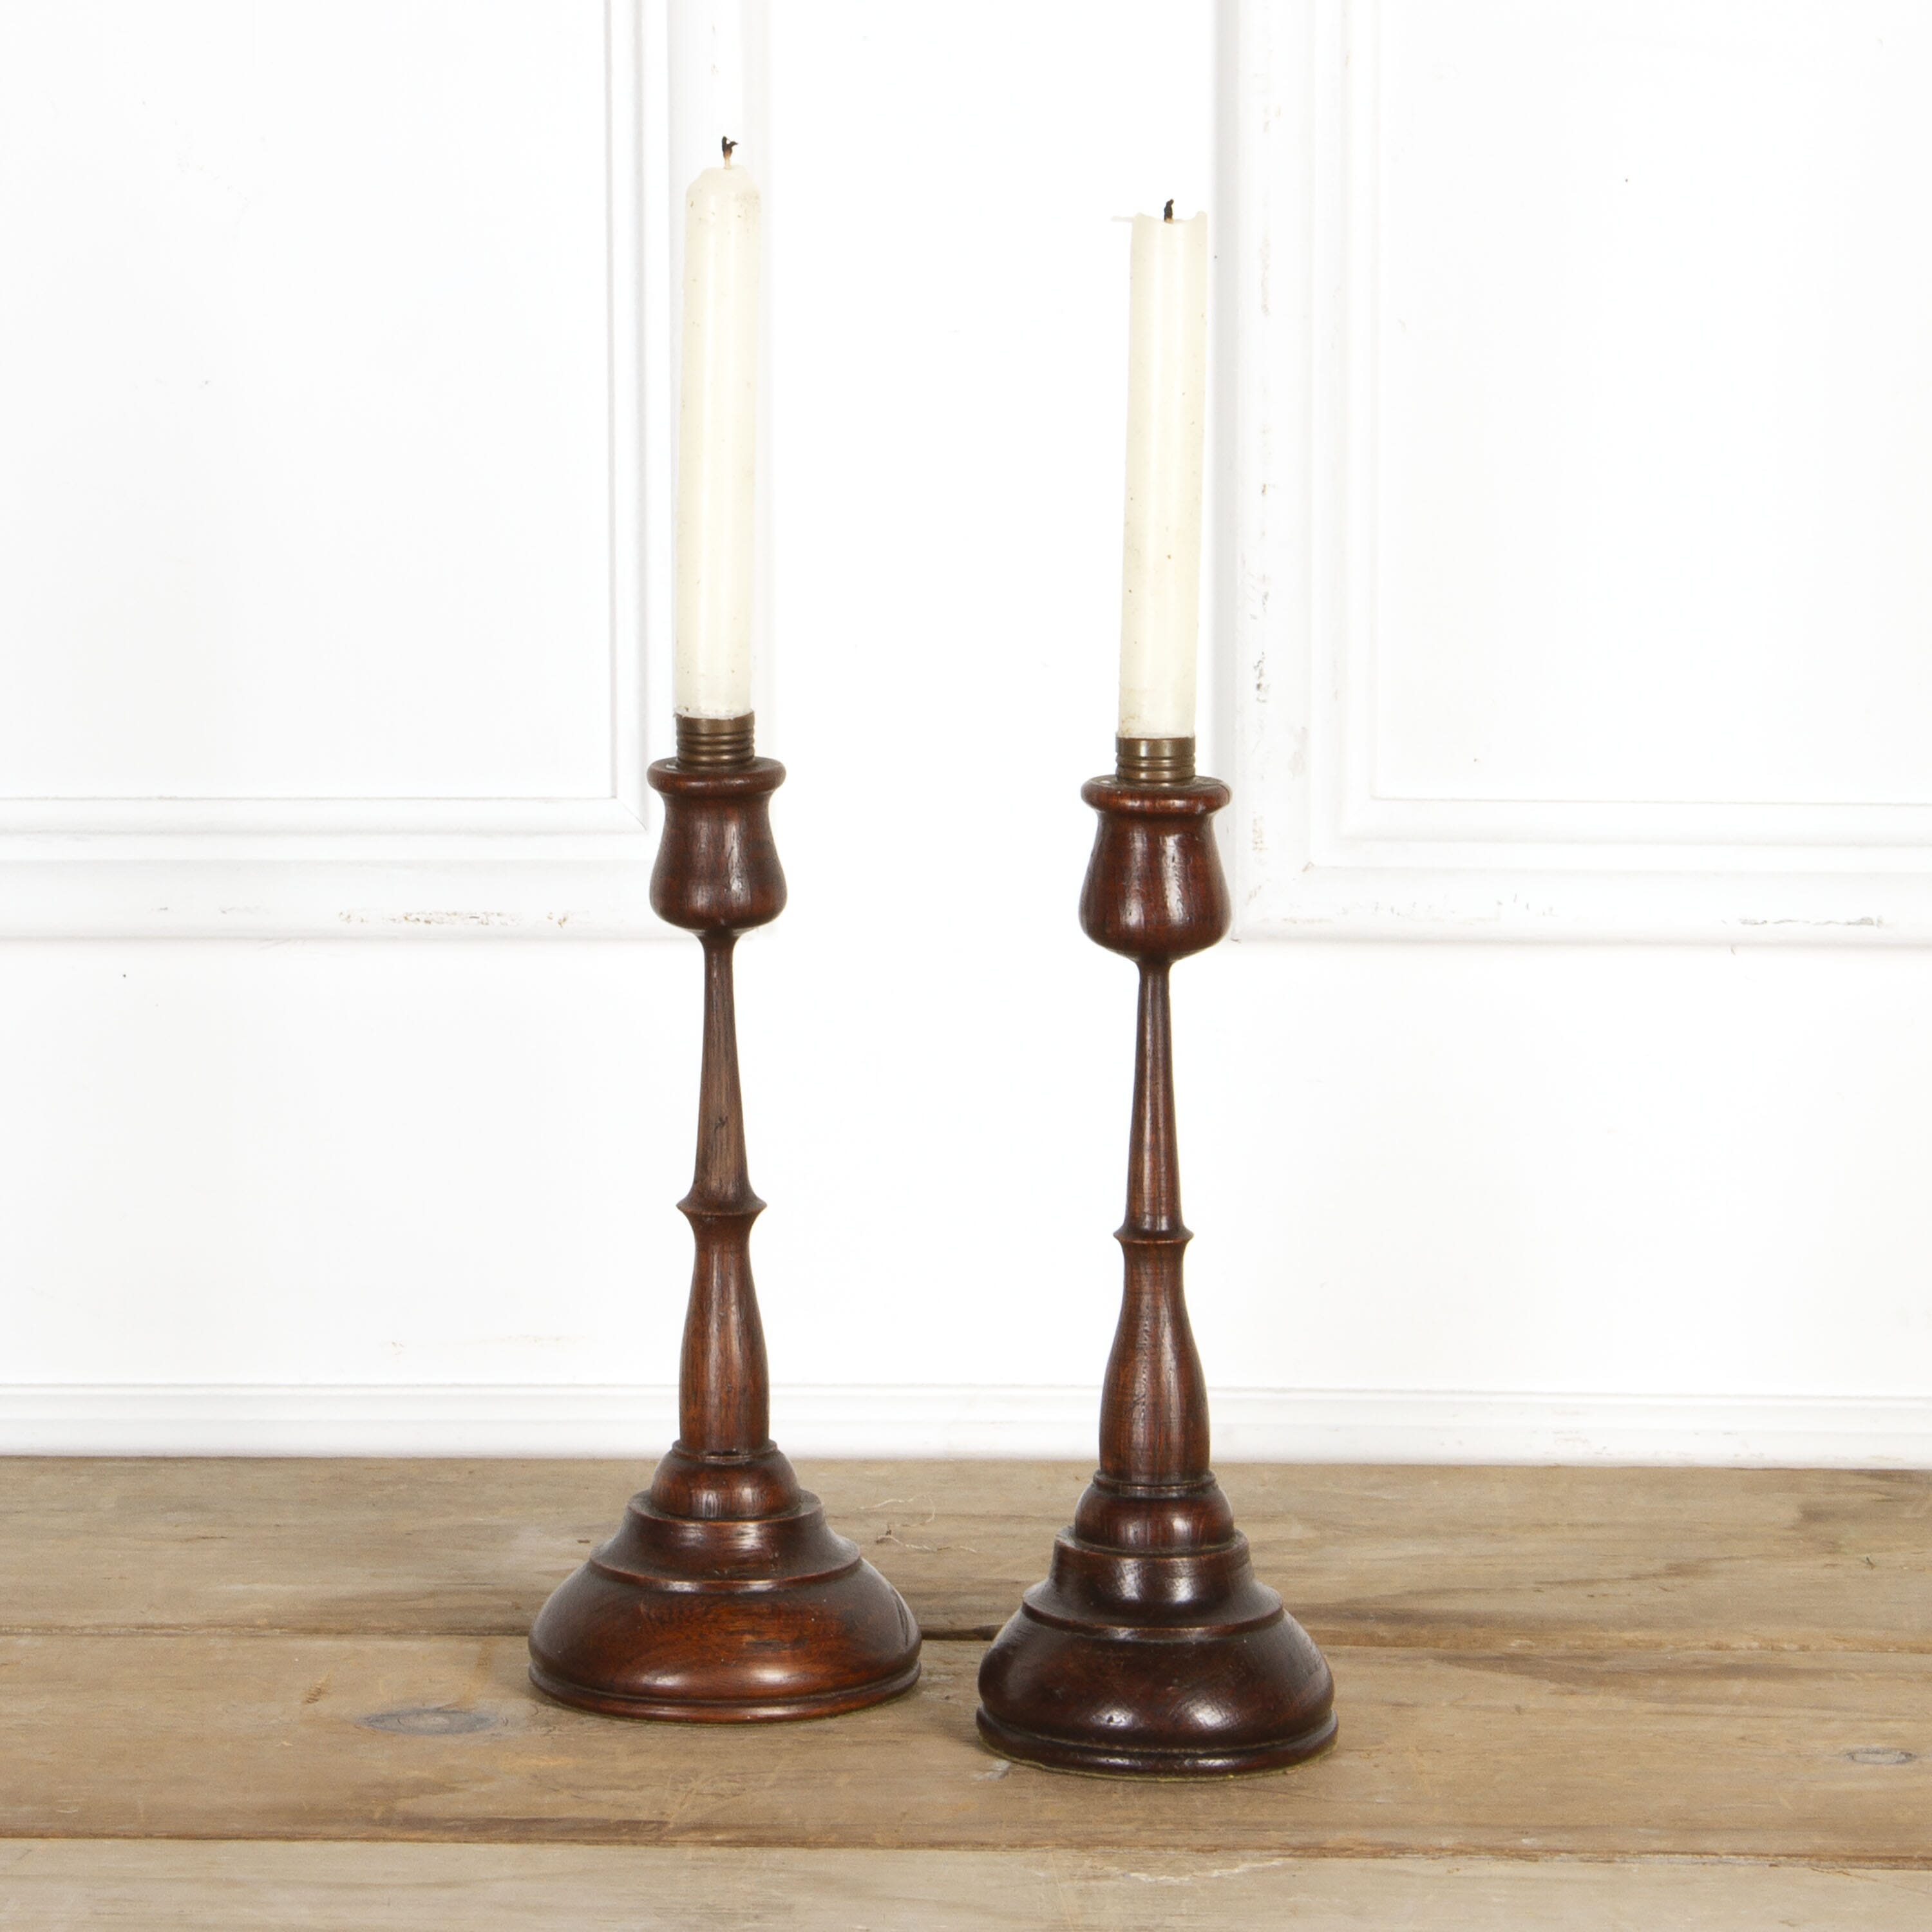 https://lorfordsantiques.sirv.com/live/catalog/product/p/a/pair-of-art-nouveau-wooden-candlesticks-1635866540-381666.jpg?q=80